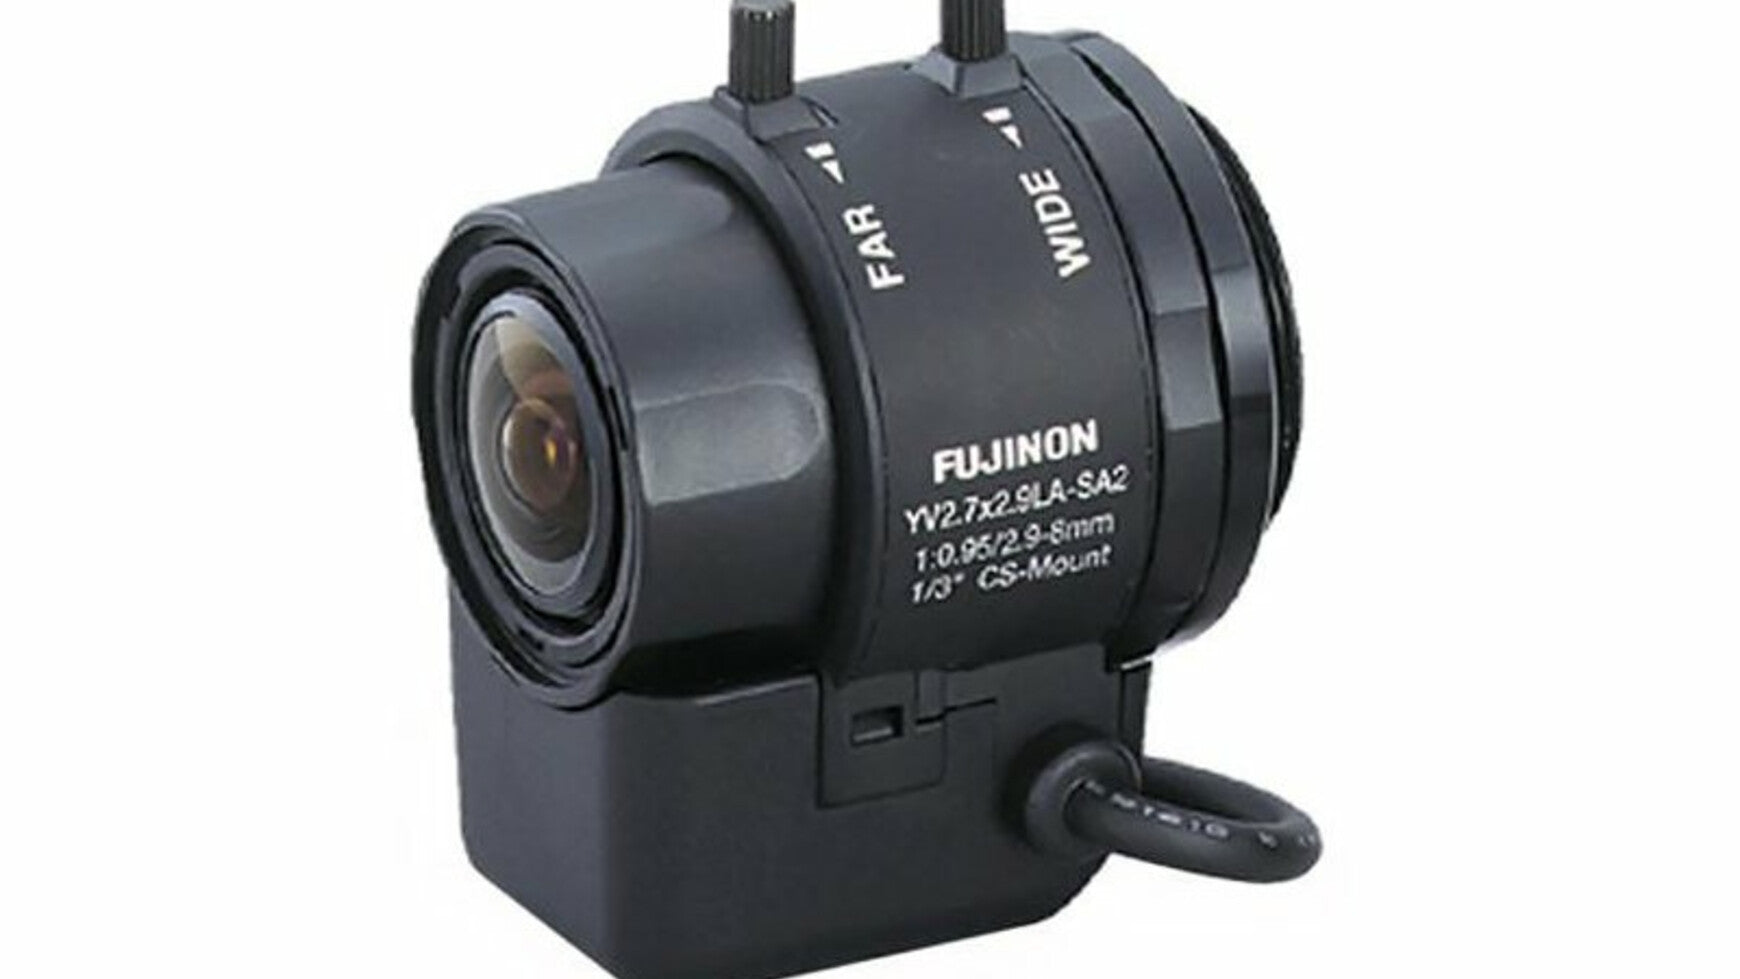 Fujinon - 2.9-8mm Day/Night Varifocal Auto Iris Lens - YV2.7x2.9LR4D-SA2L